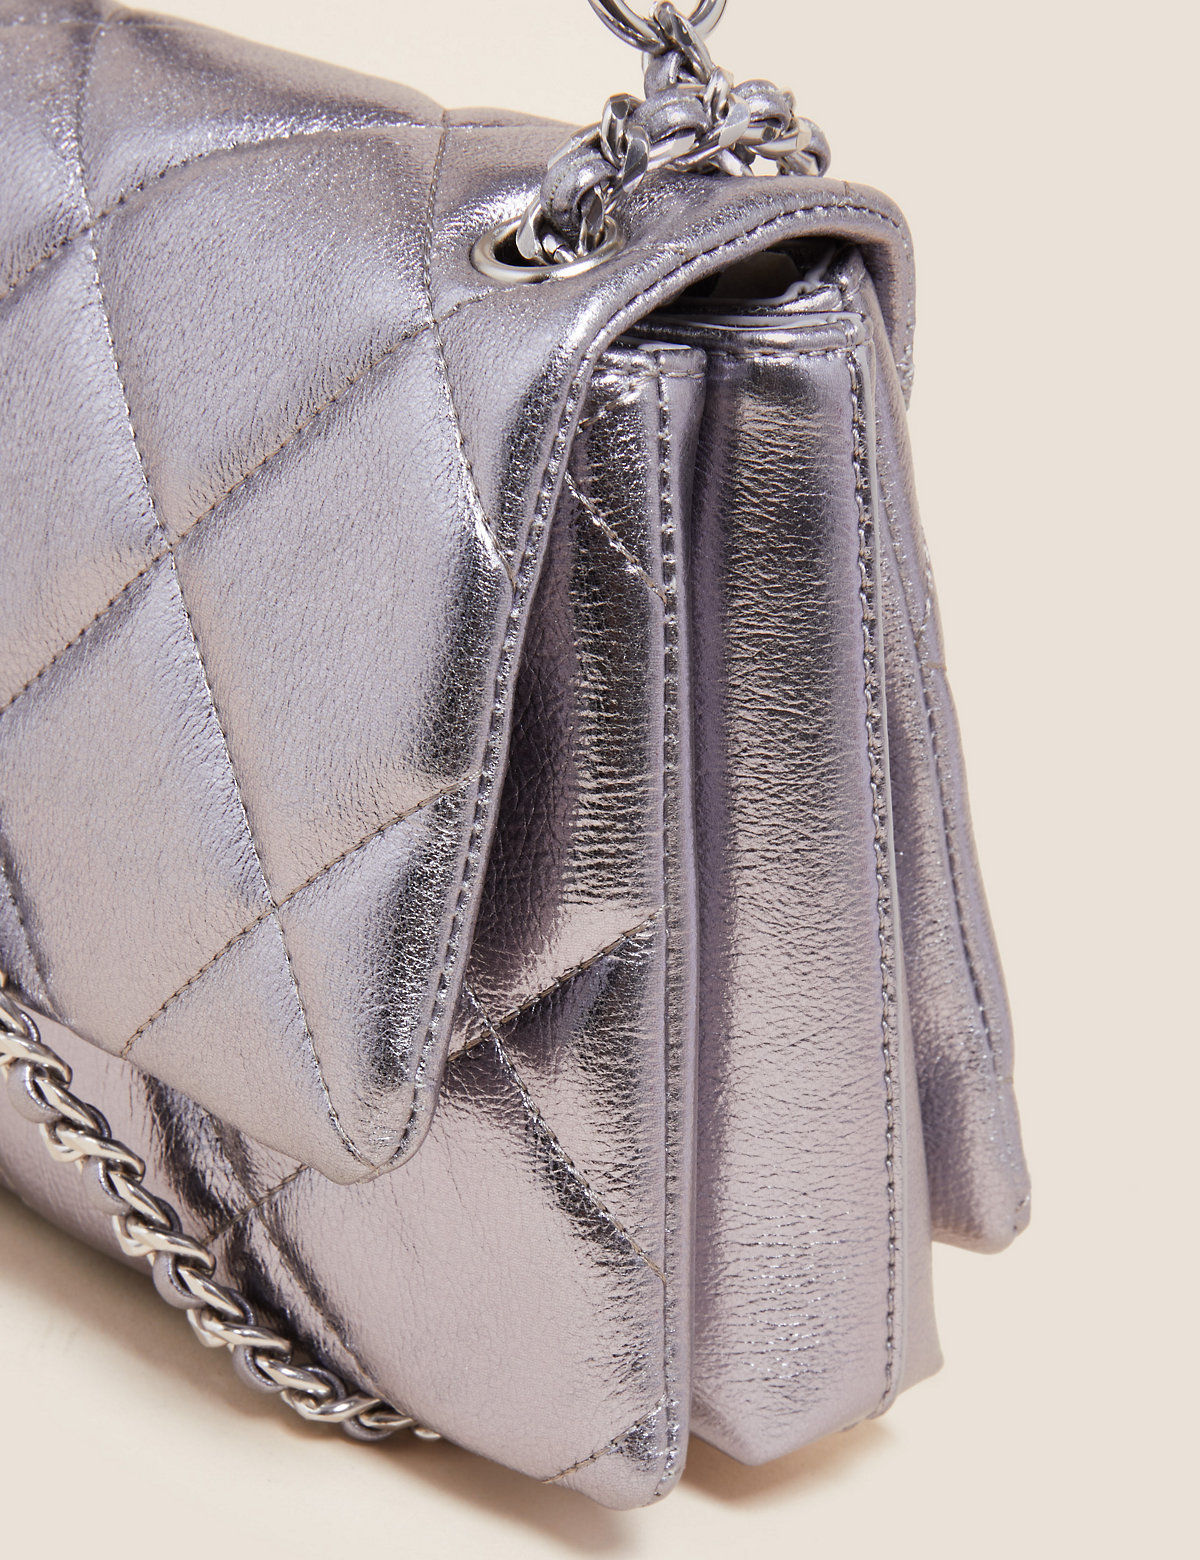 Faux Leather Chain Strap Shoulder Bag